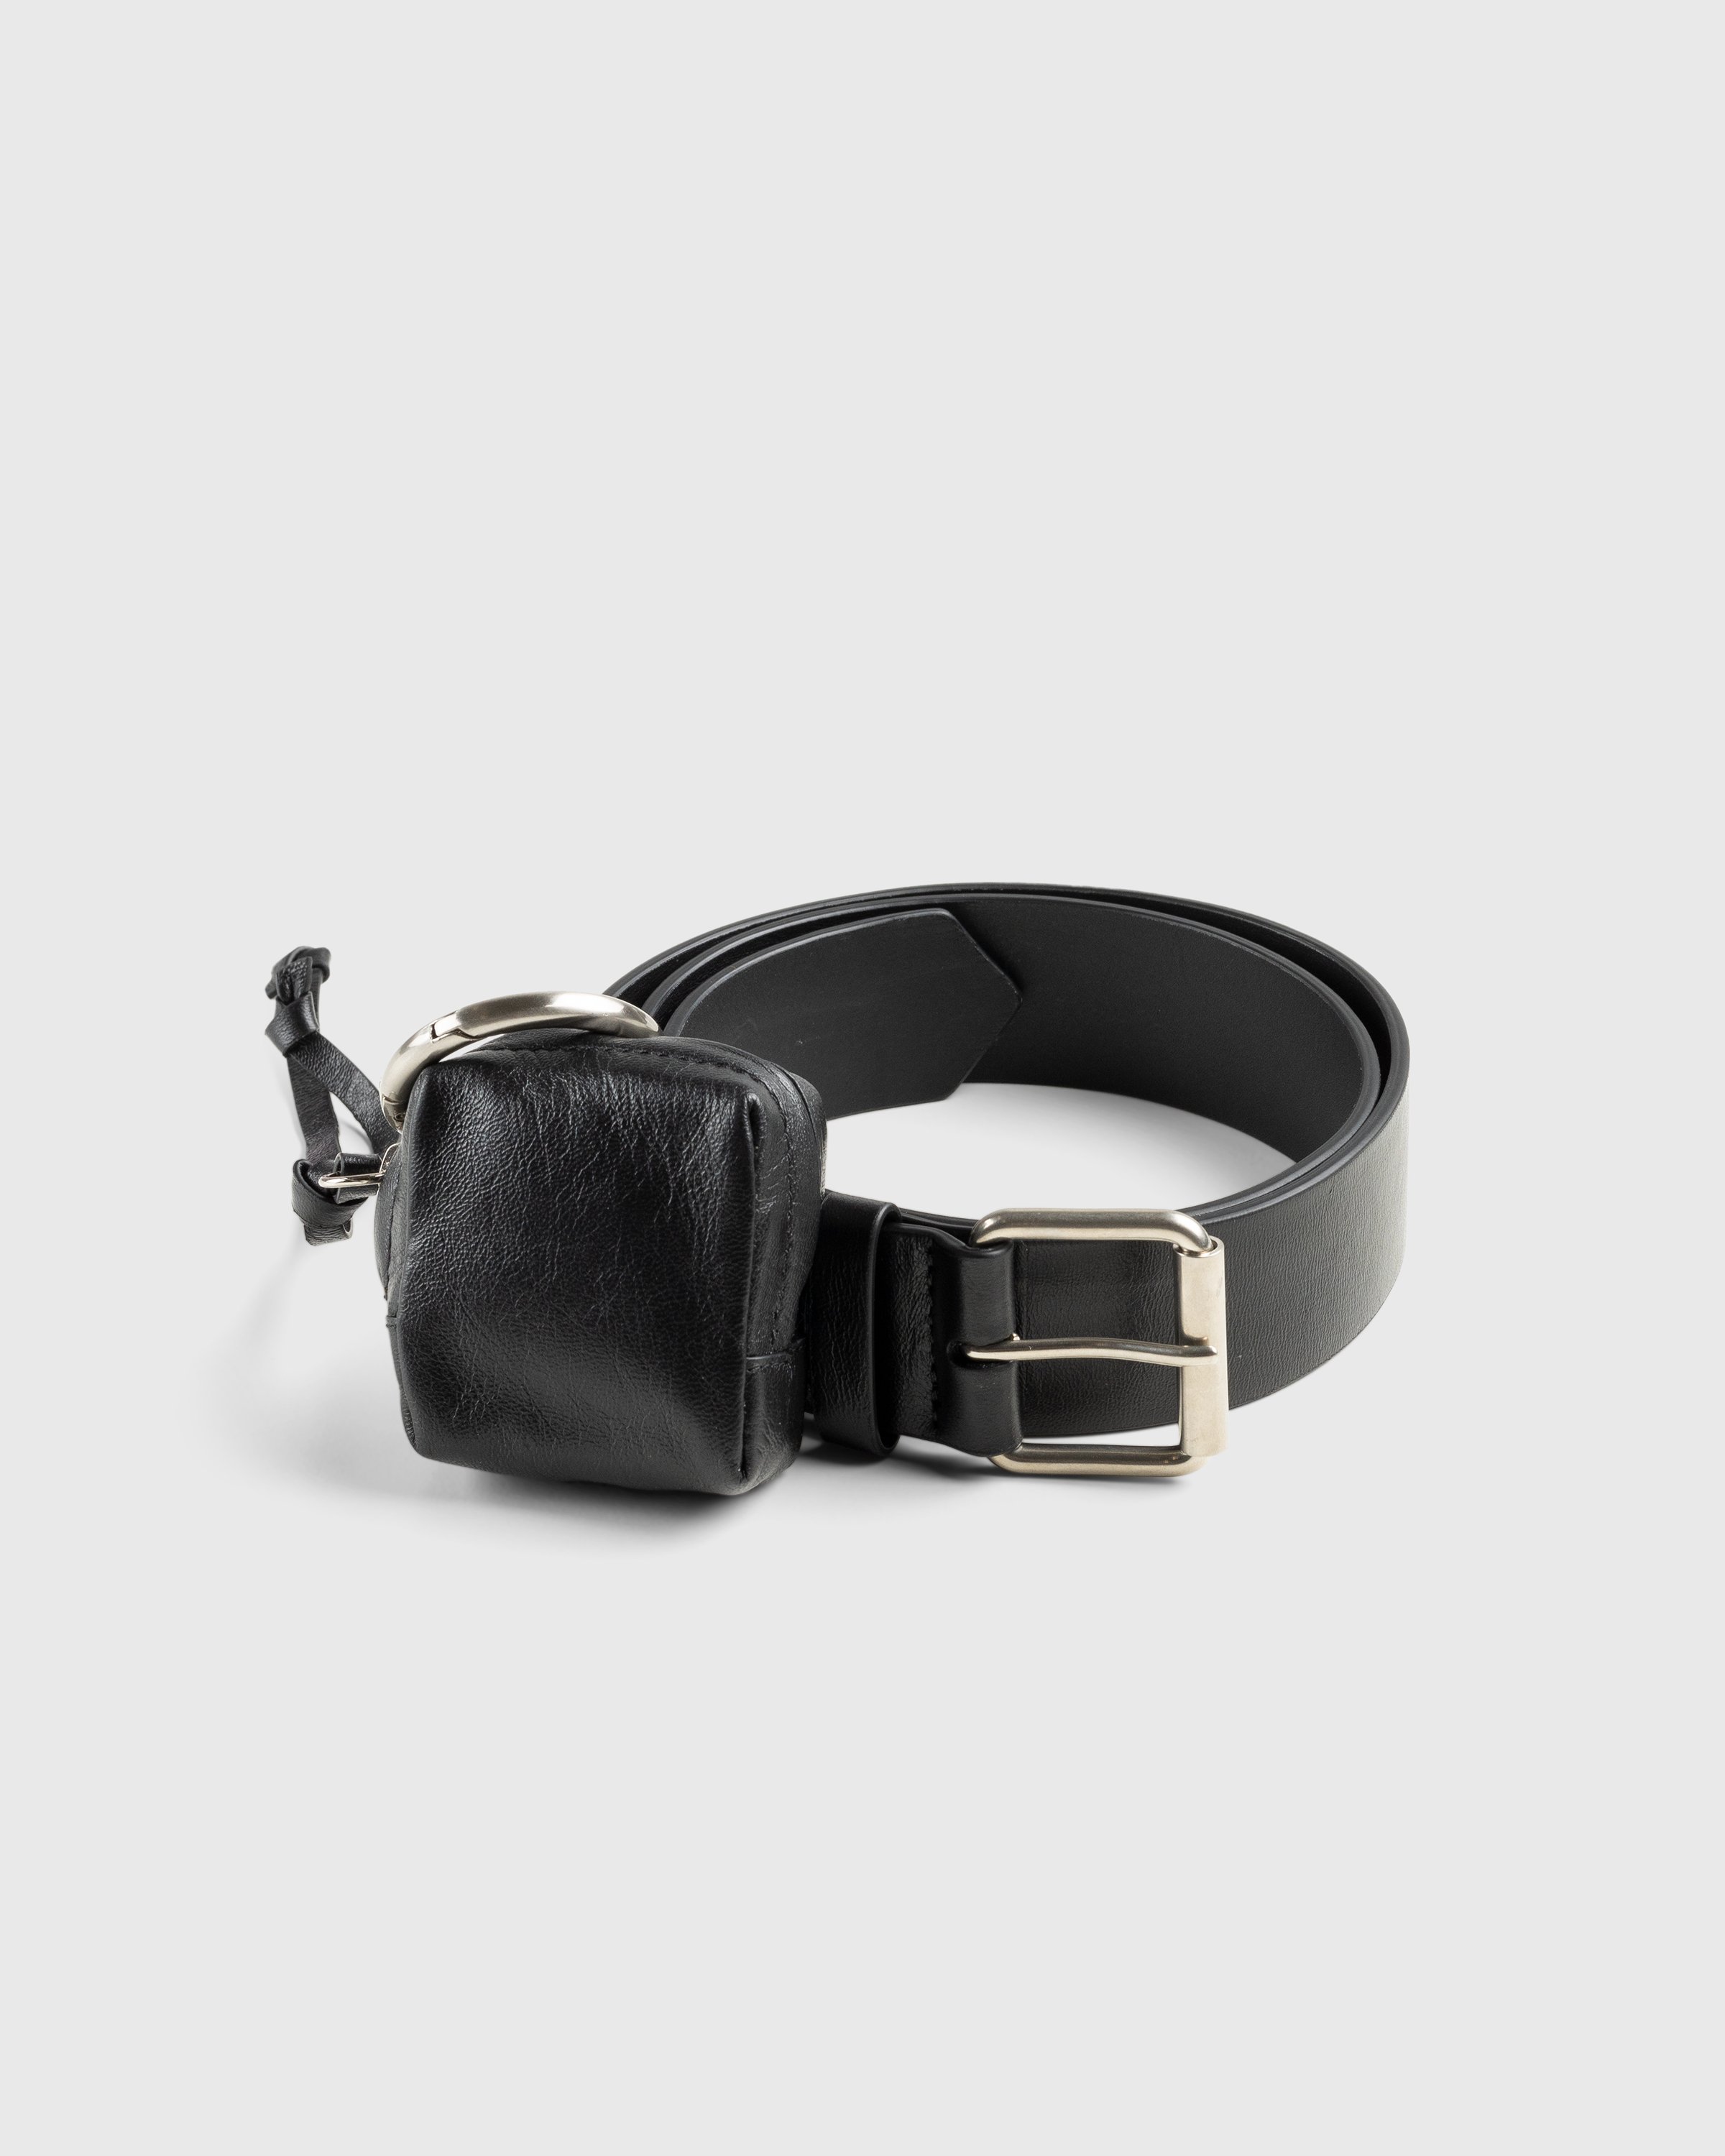 Dries van Noten - Leather Belt With Pouch Black - Accessories - Black - Image 1